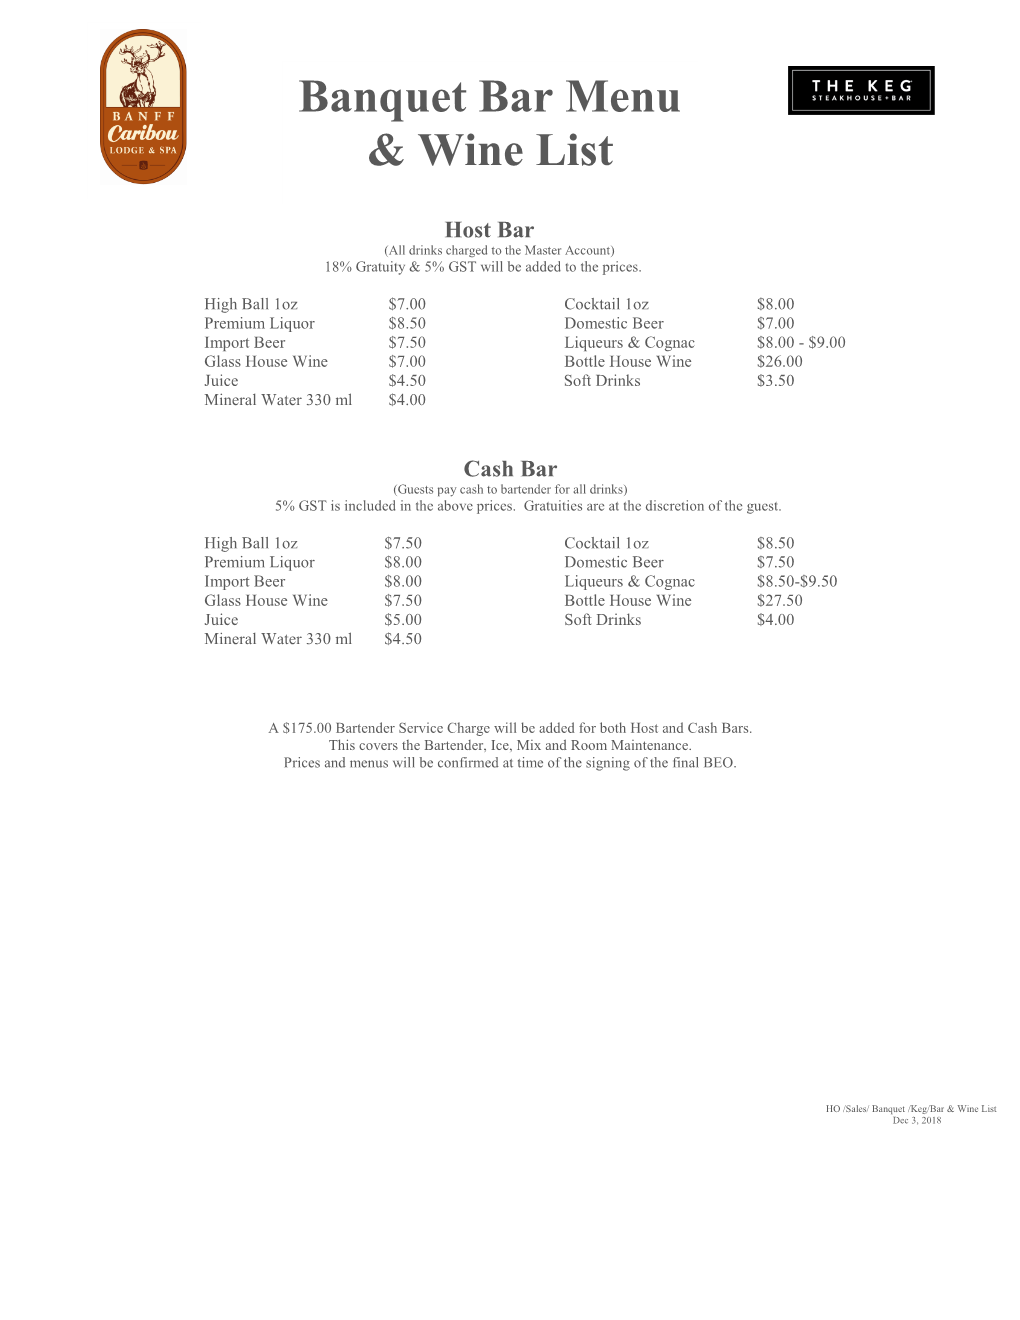 Banquet Bar Menu & Wine List